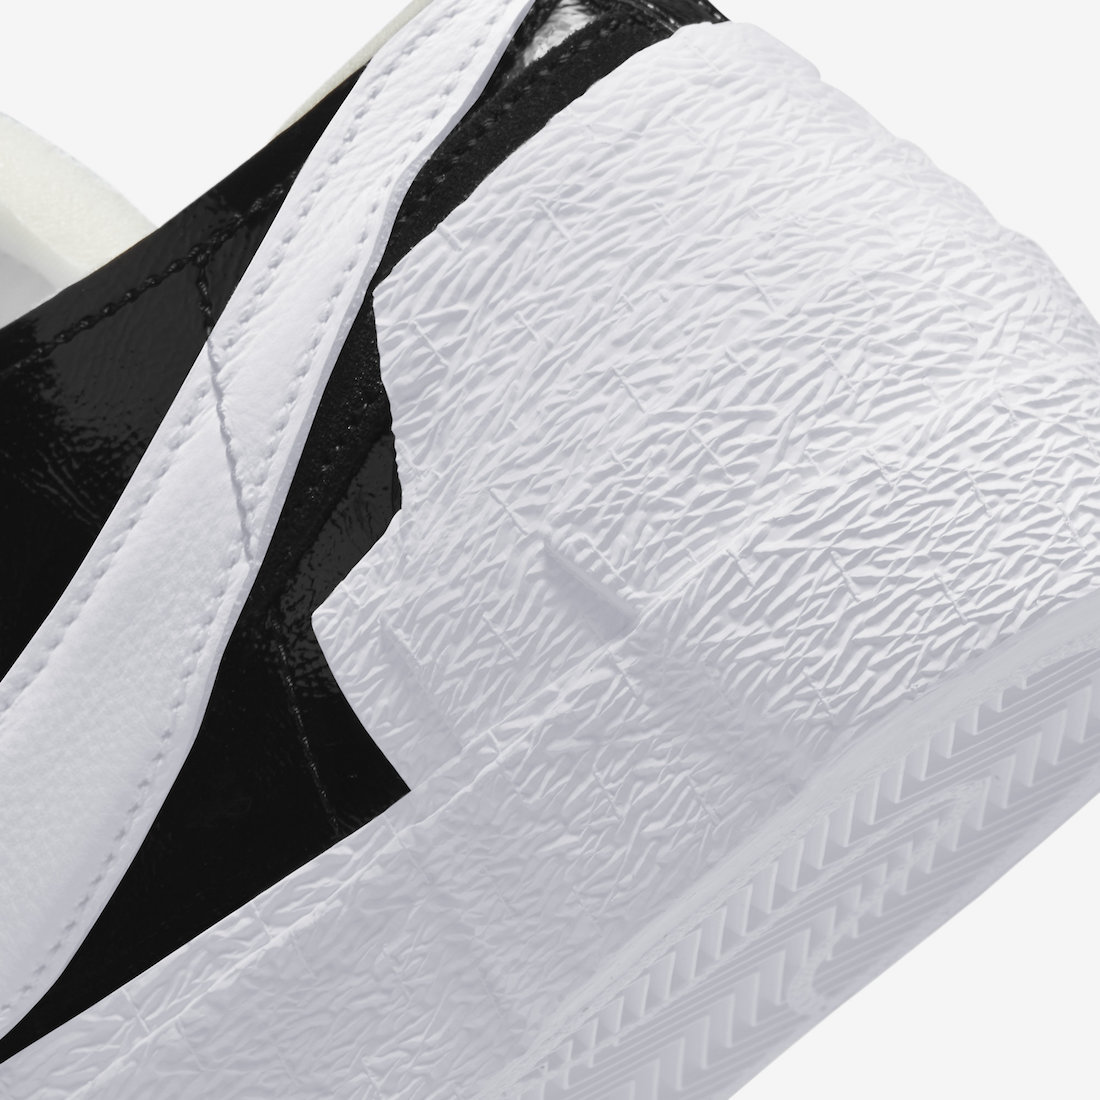 Sacai Nike Blazer Low Black专利DM6443-001发布日期